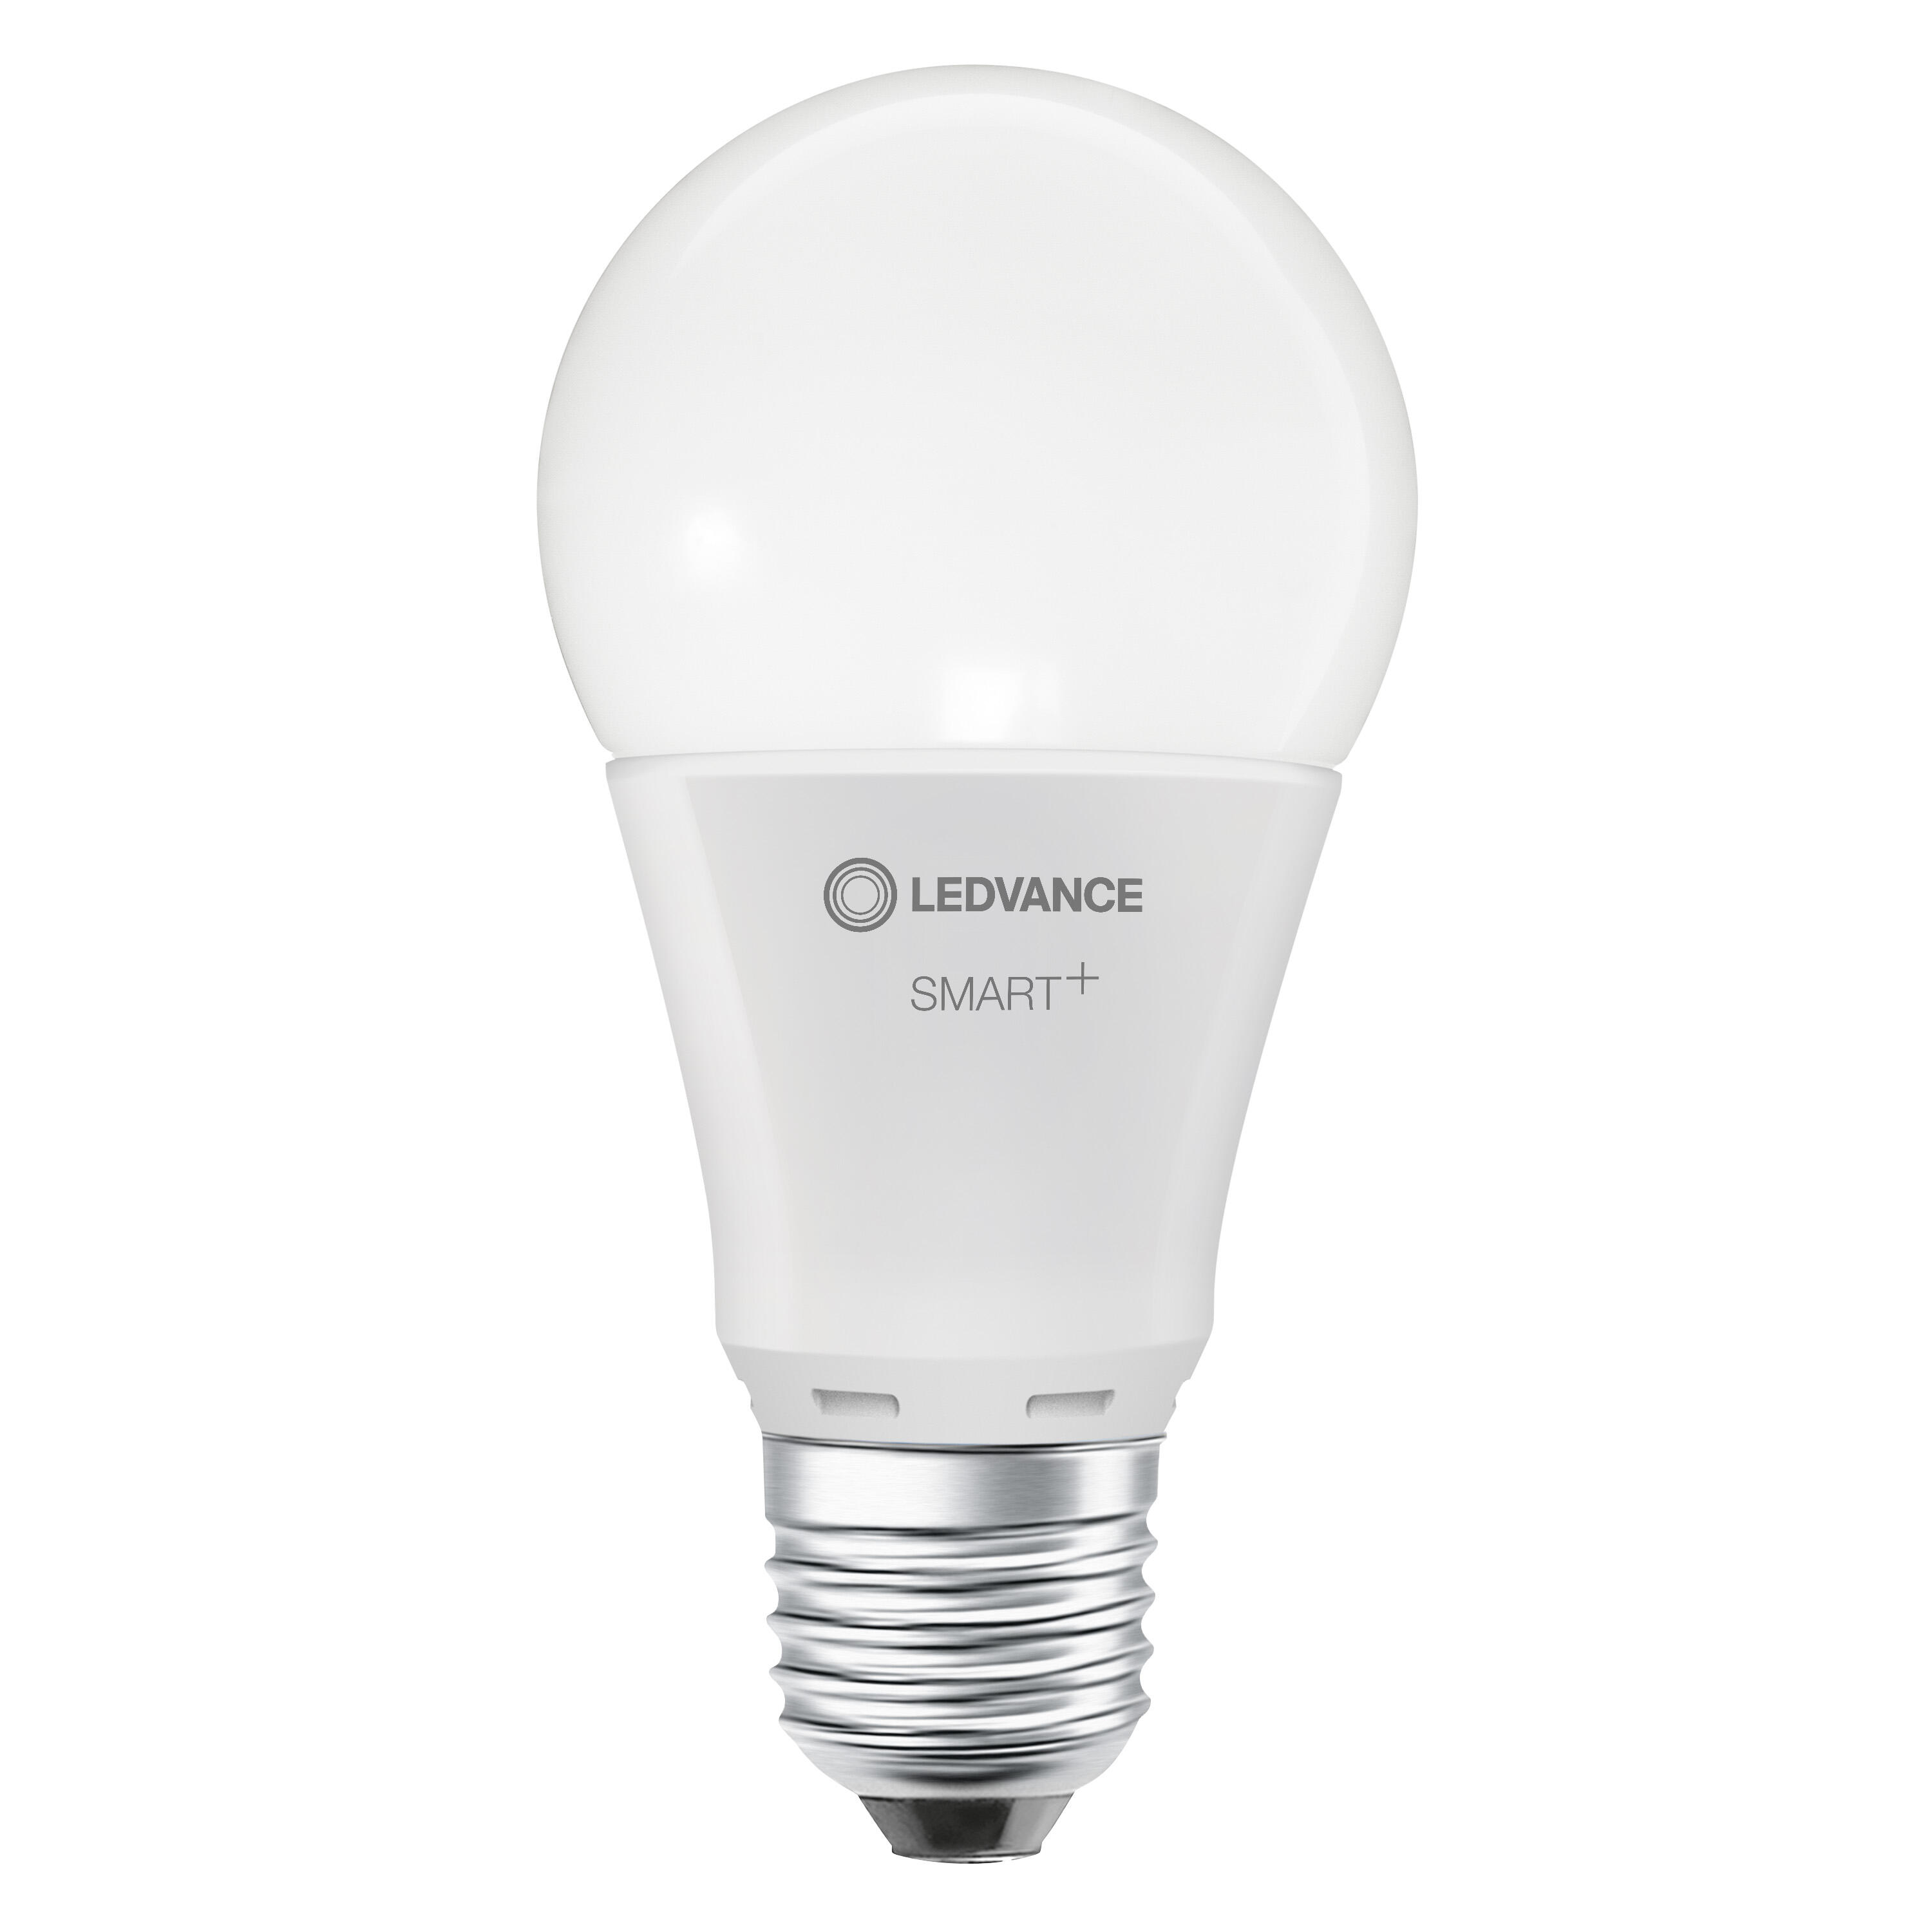 Bombilla LED E27 A60 10W ¡OFERTON! • IluminaShop